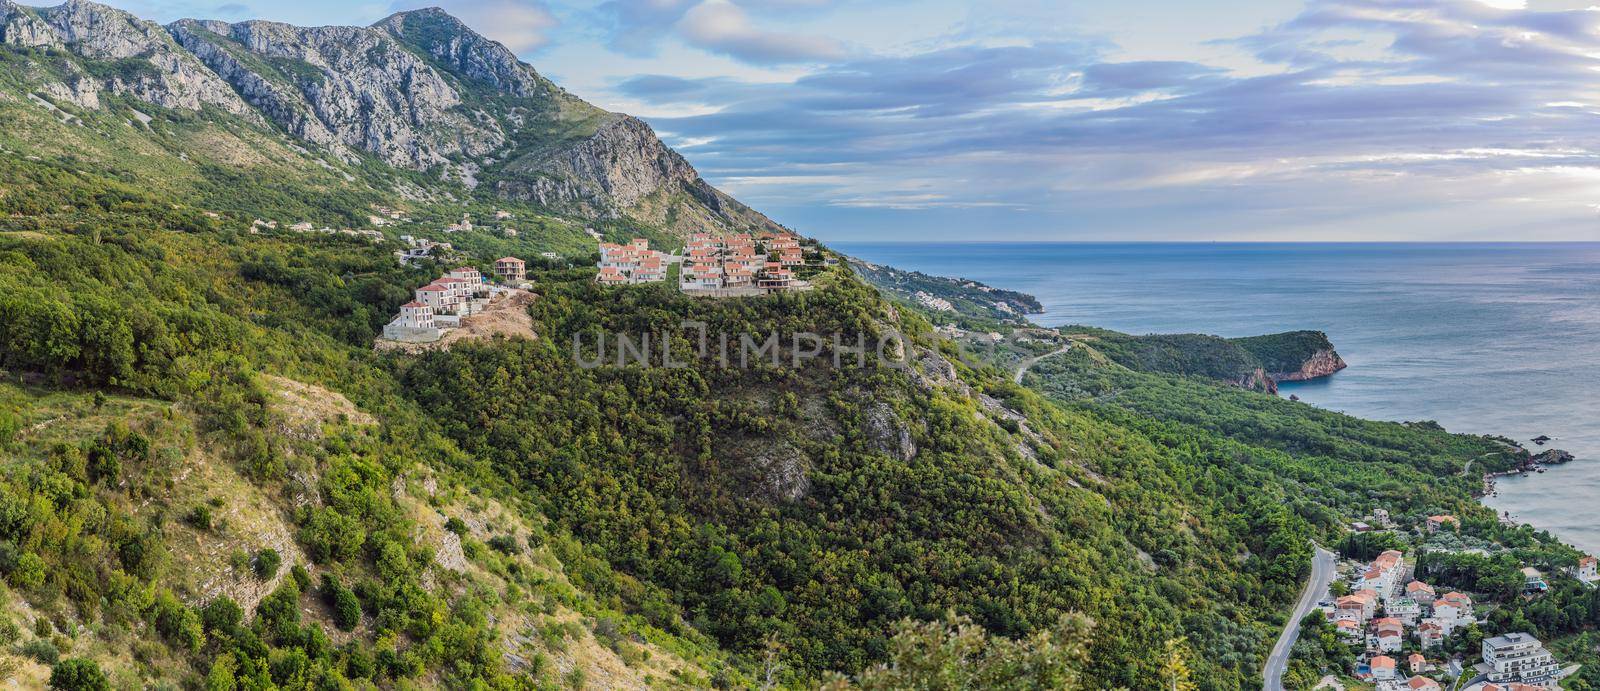 Mountains in Montenegro near the resort town of Budva by galitskaya